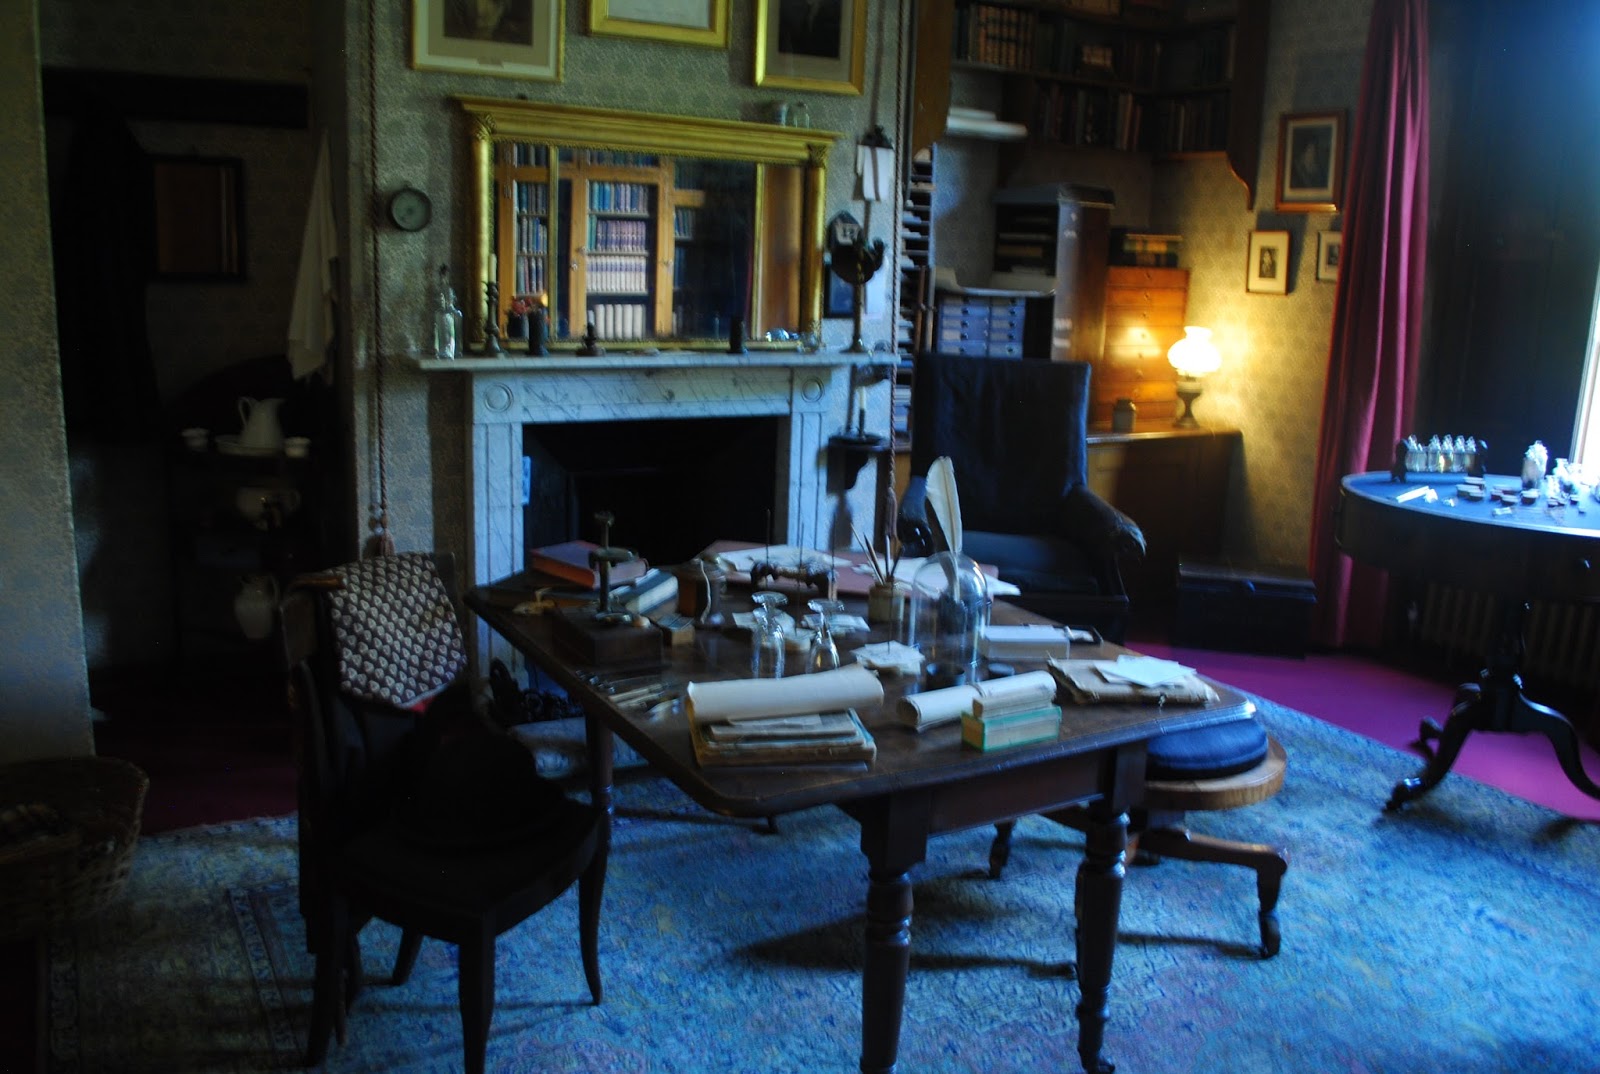 Charles Darwin's study room in Downe House